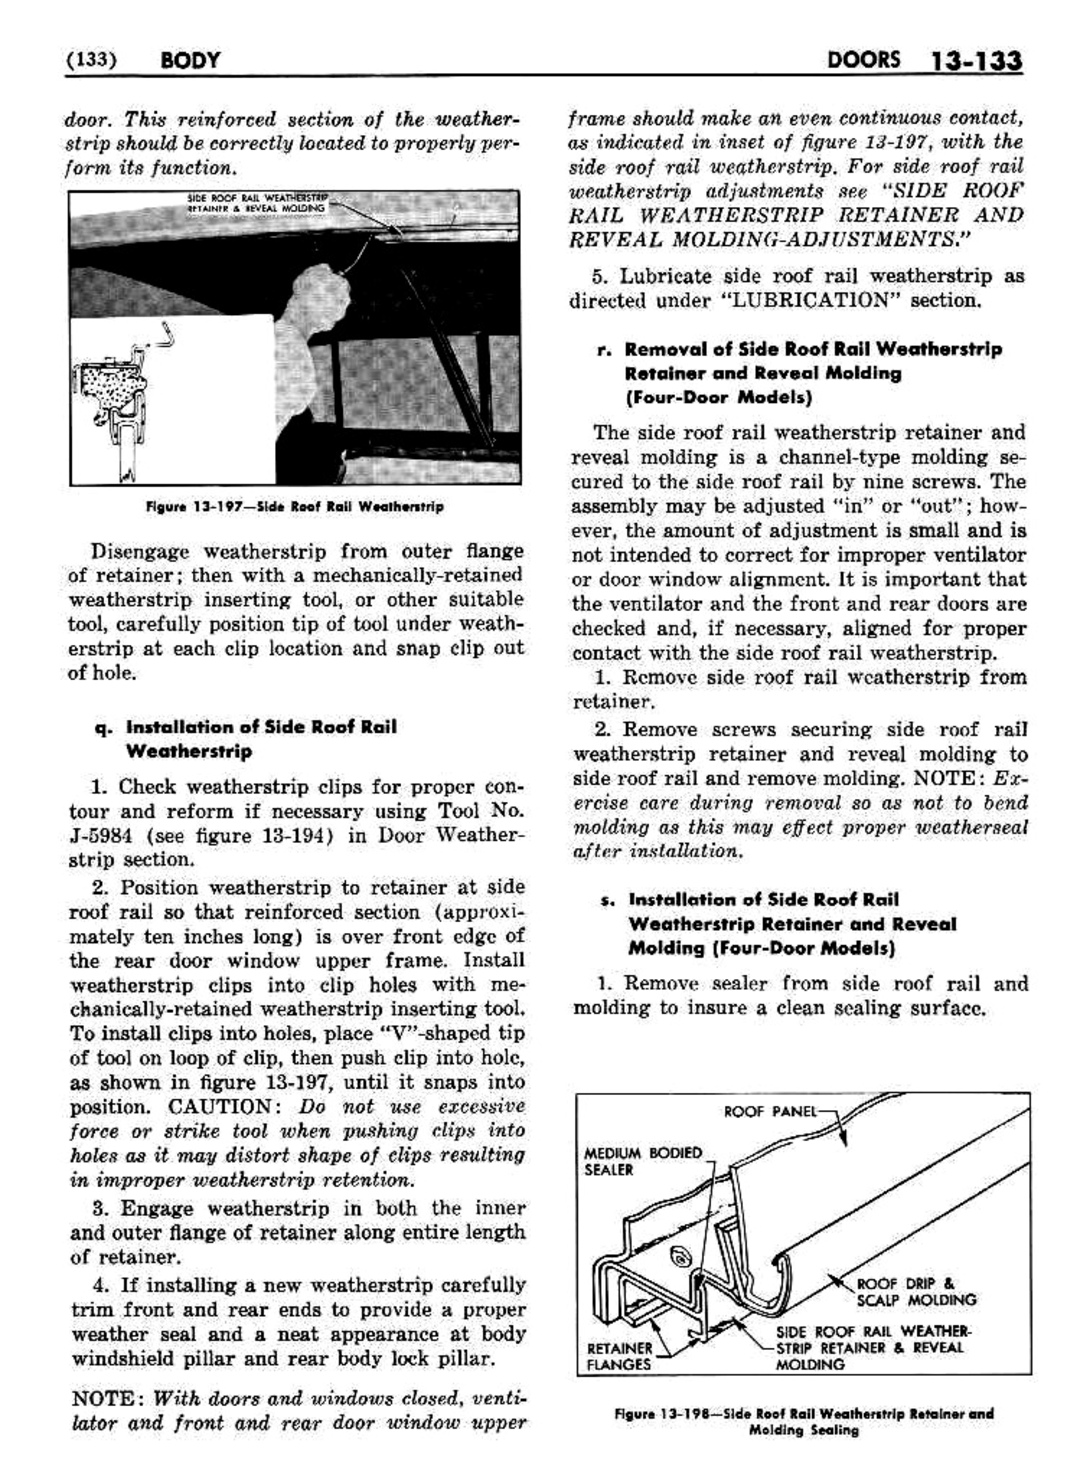 n_1958 Buick Body Service Manual-134-134.jpg